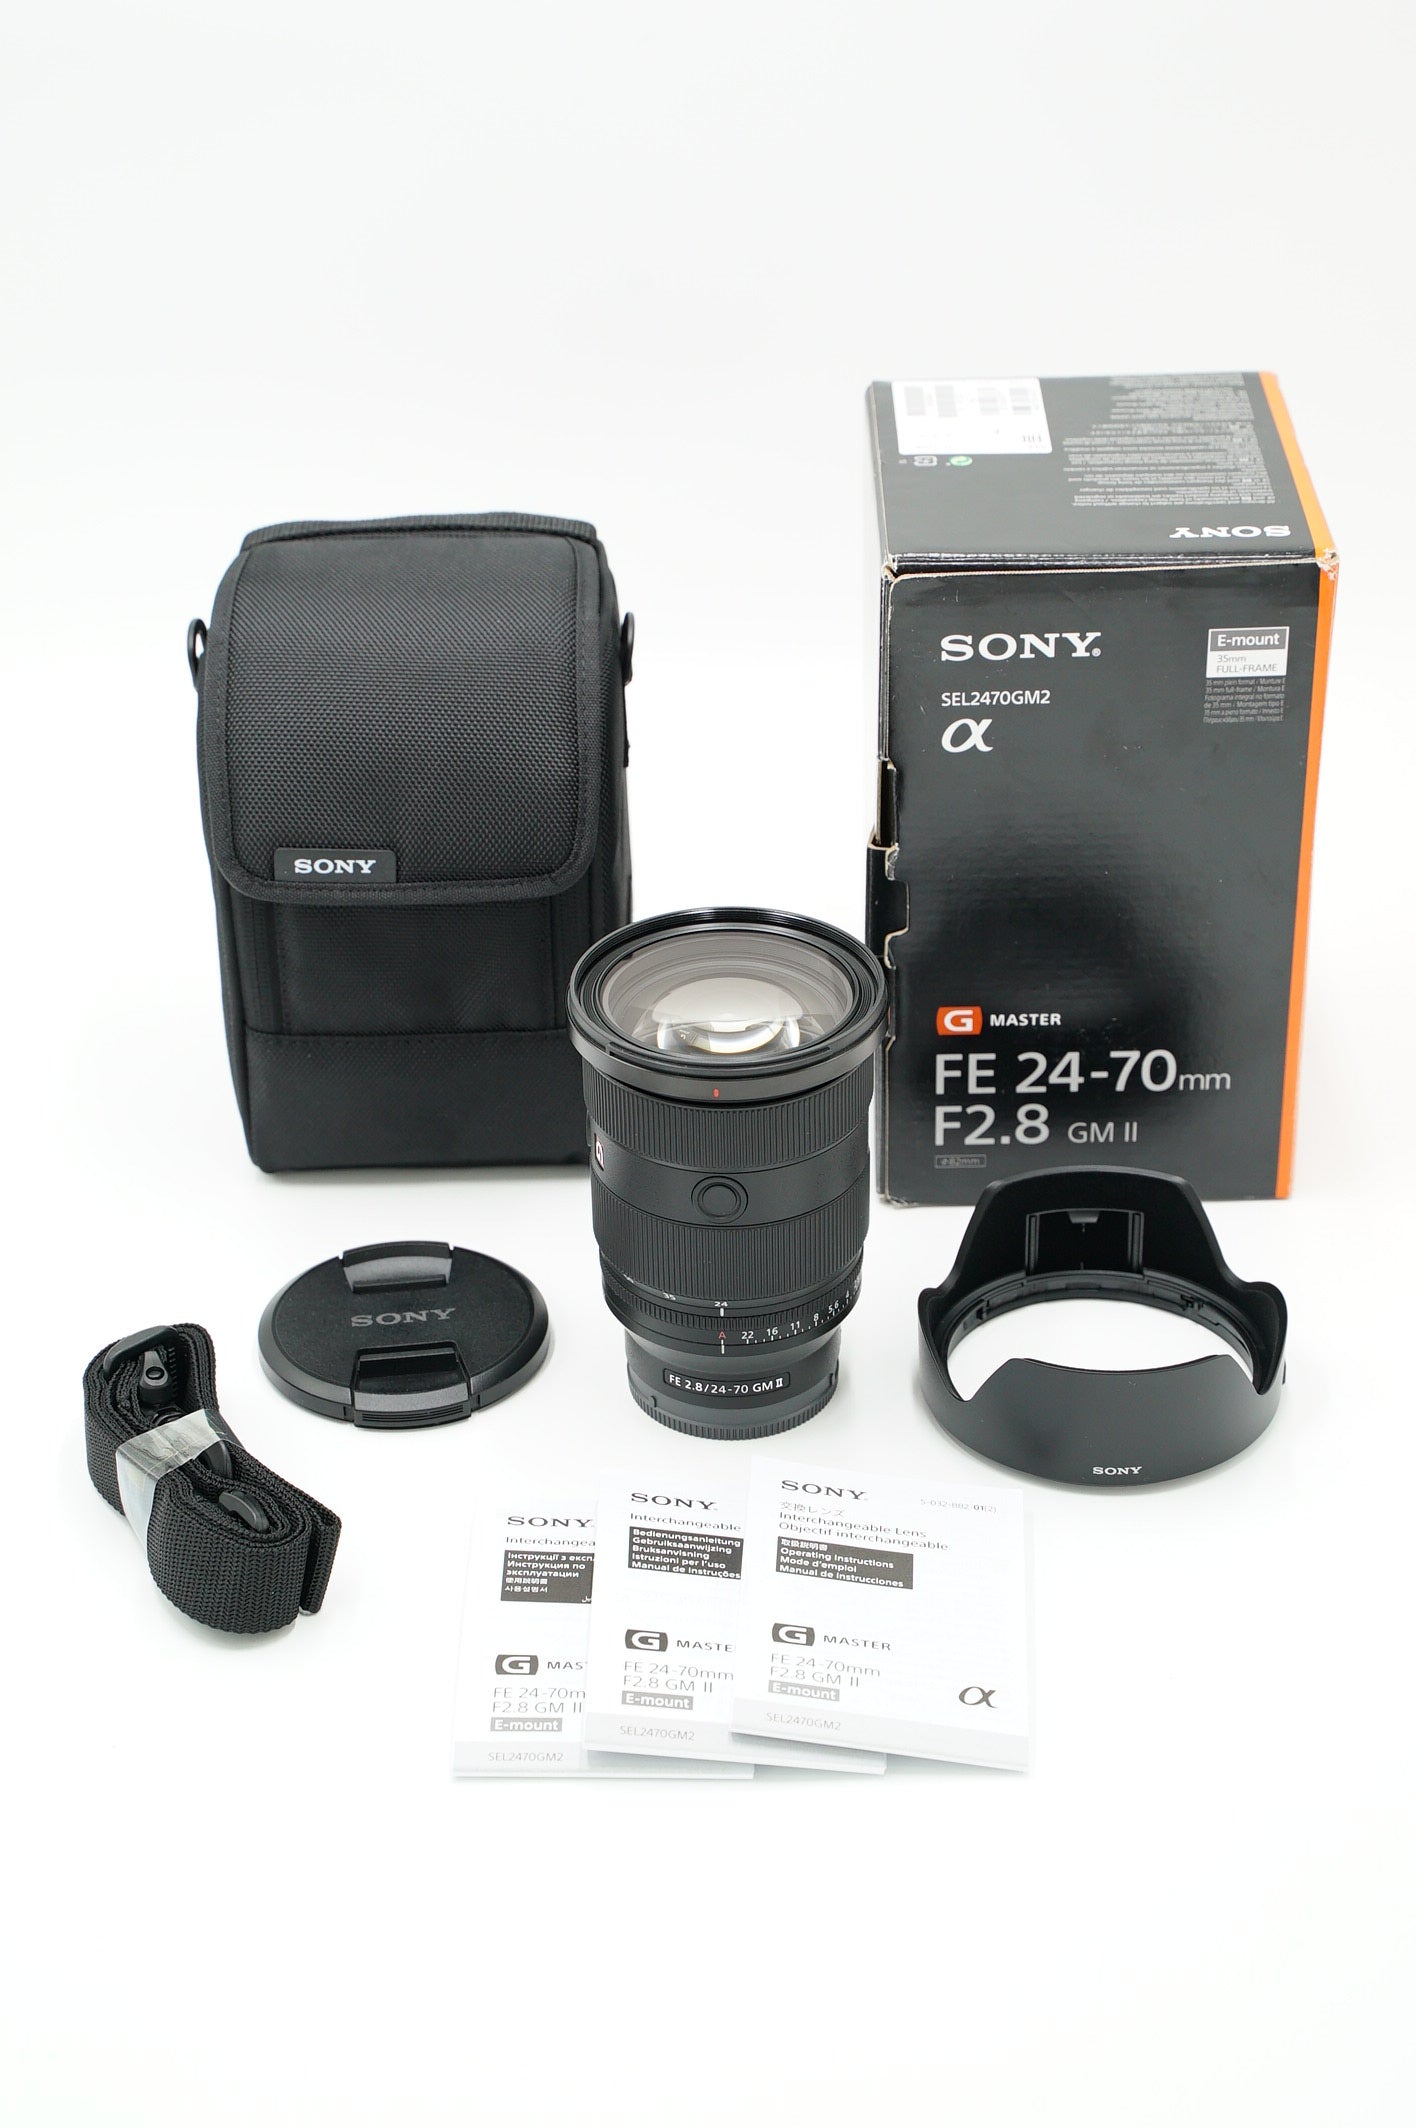  Sony FE 24-70mm f/2.8 GM II Lens (SEL2470GM2) Bundle